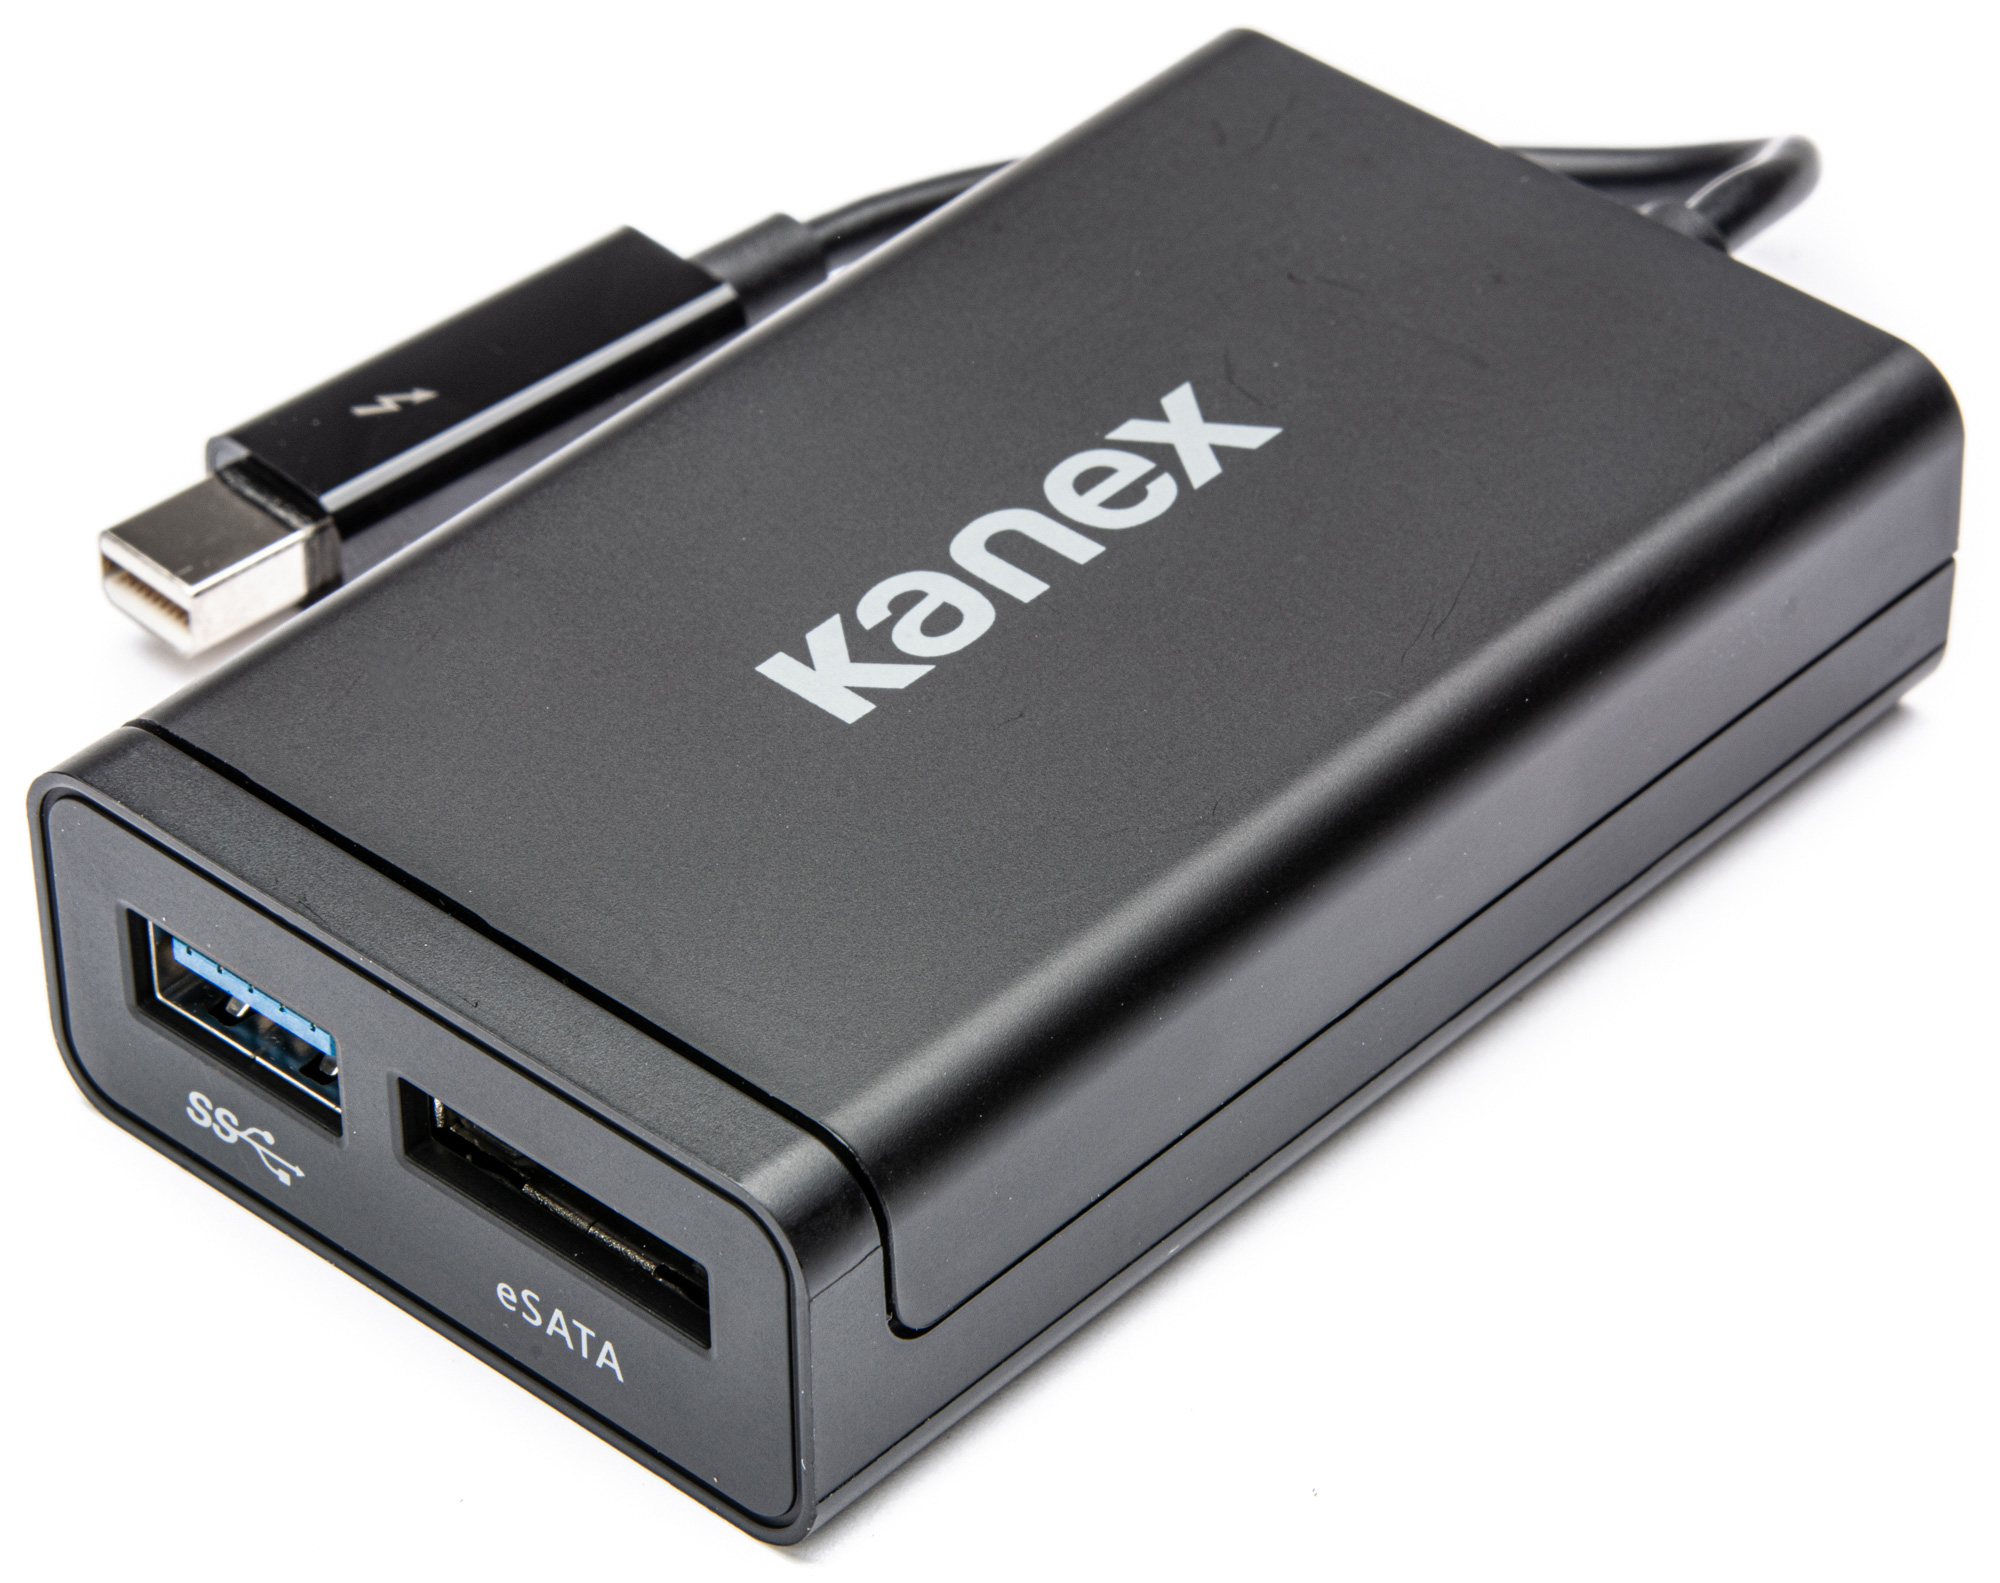 Kanex KTU20 - Adaptateur Thunderbolt vers Ethernet et USB 3.0 - Thunderbolt  - KANEX